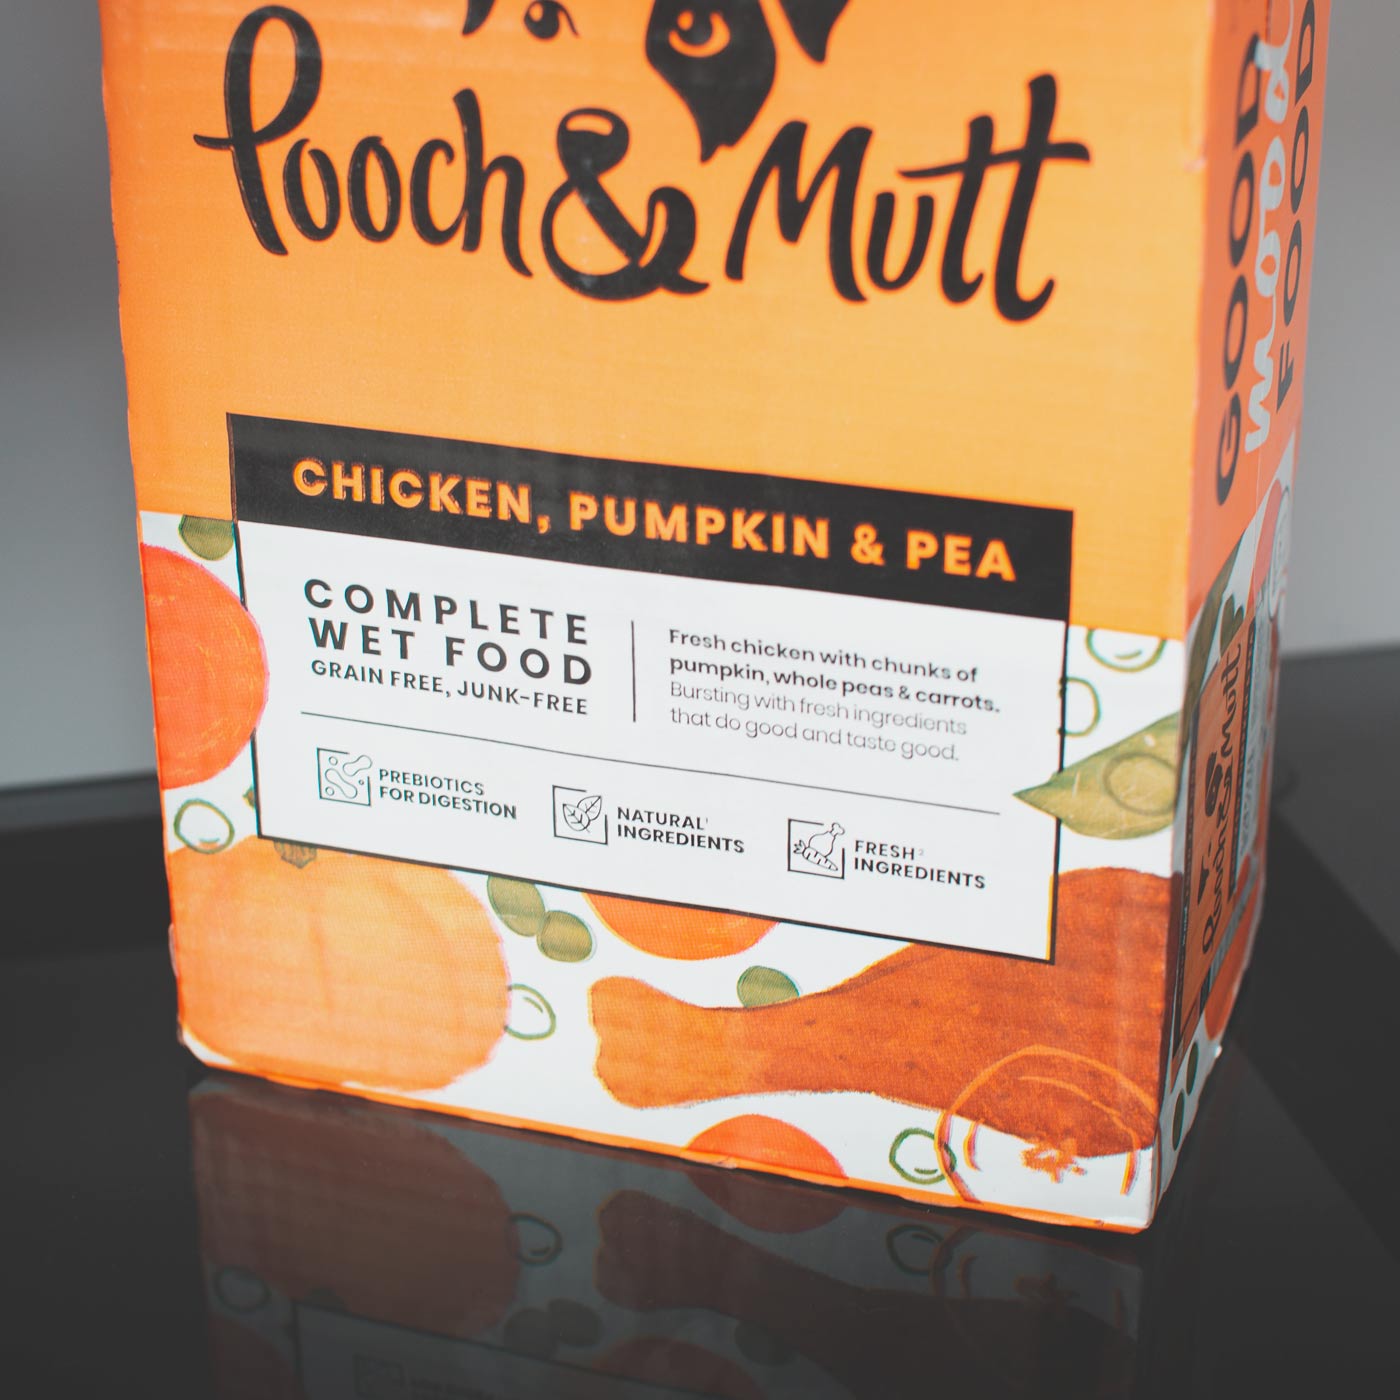 Pooch & Mutt Chicken, Pumpkin & Pea Dog Food (Case of 12)